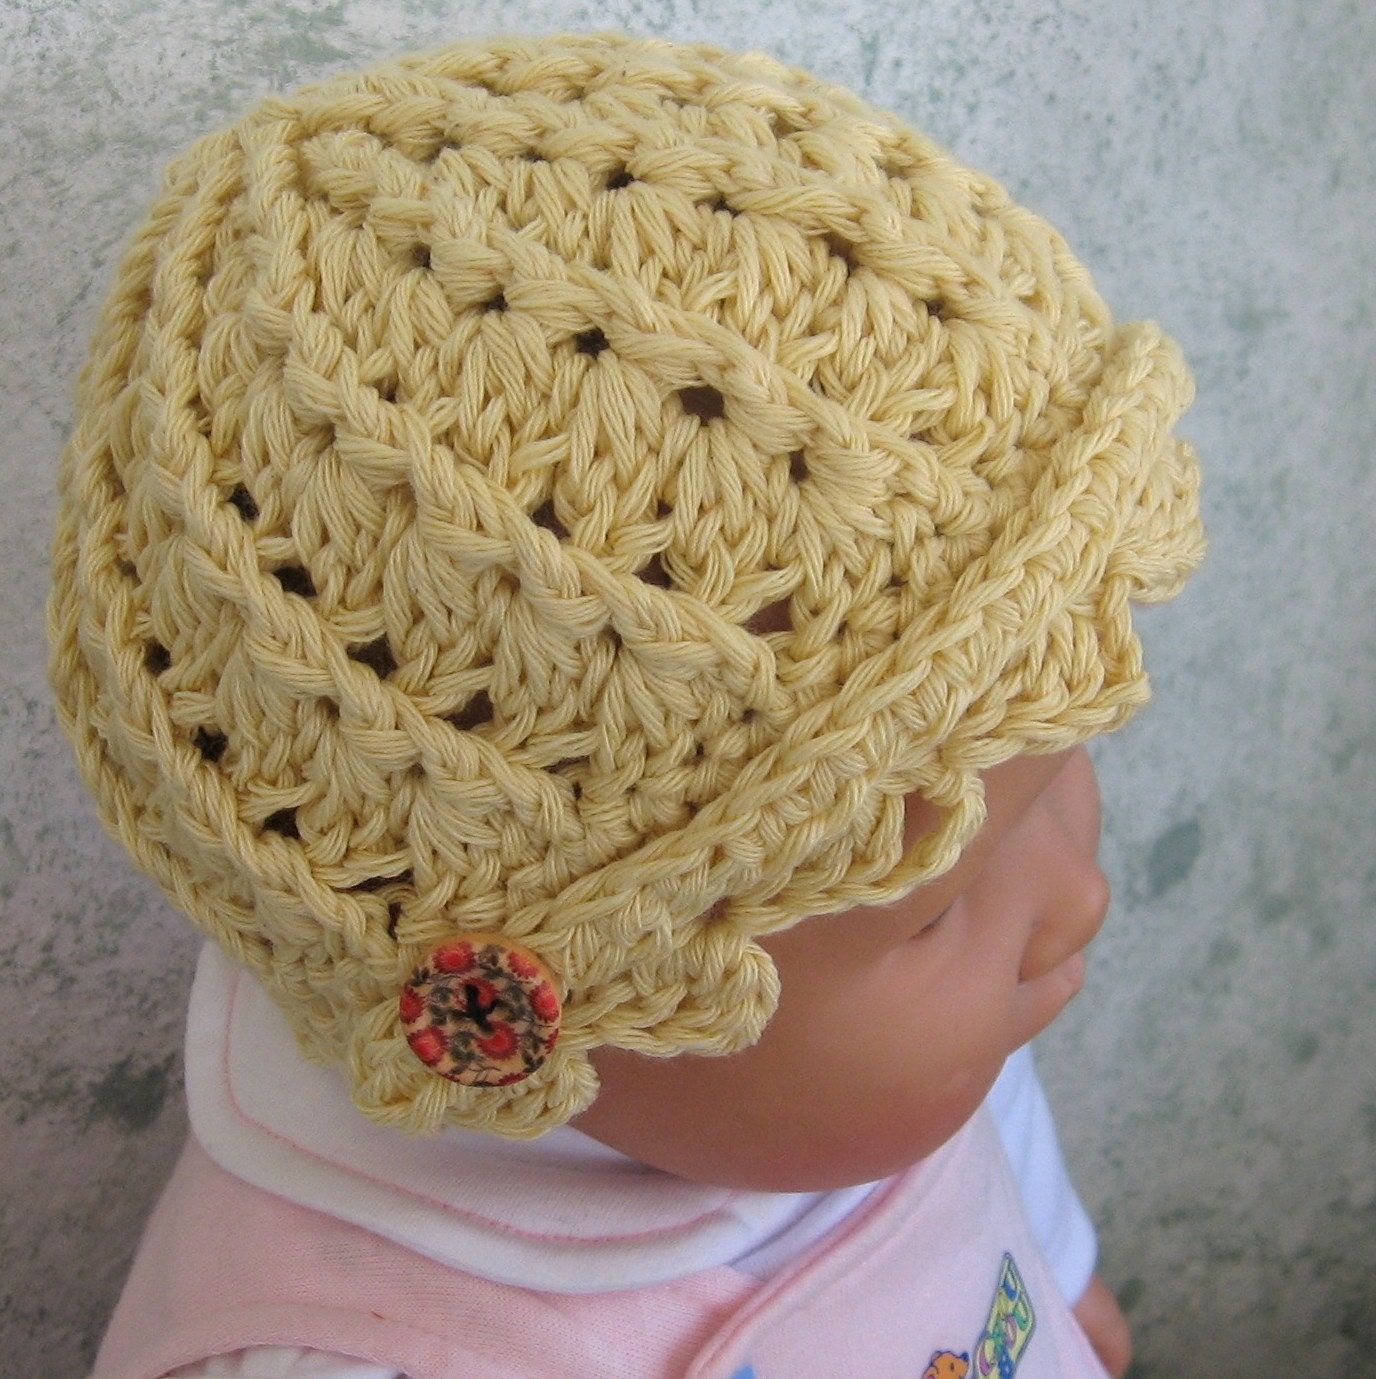 Crochet spiral hat